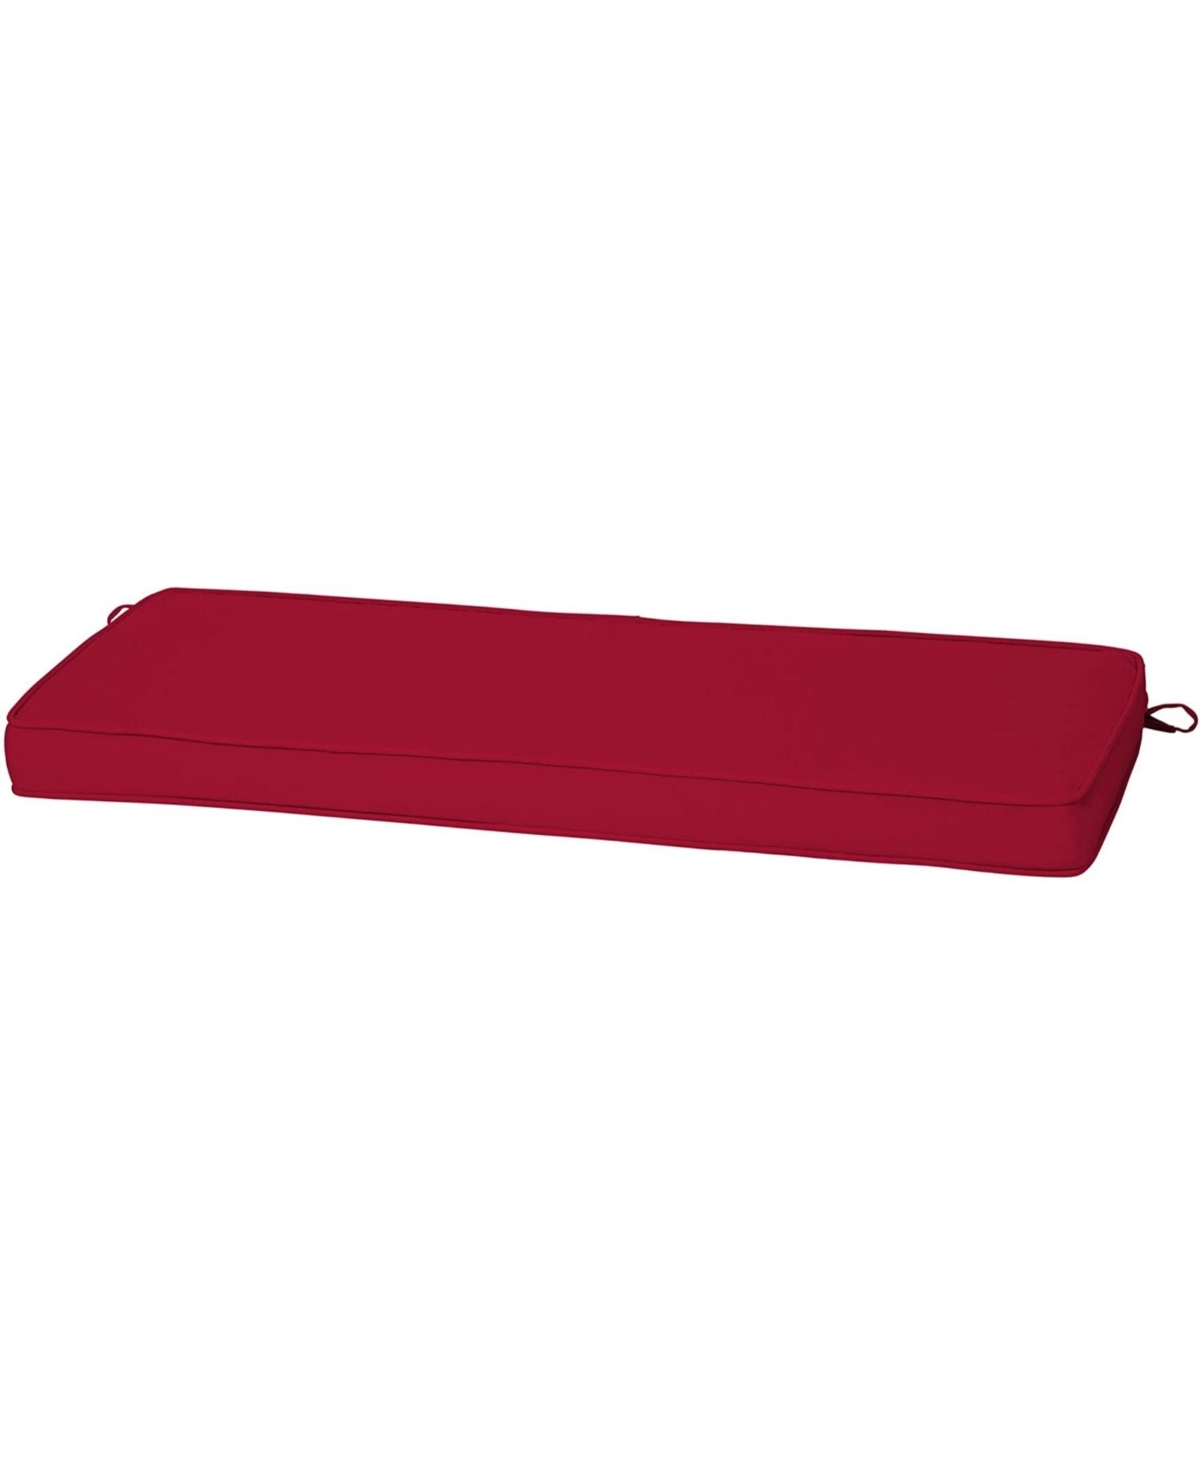 ProFoam EverTru Outdoor Patio Bench Cushion Red - Red